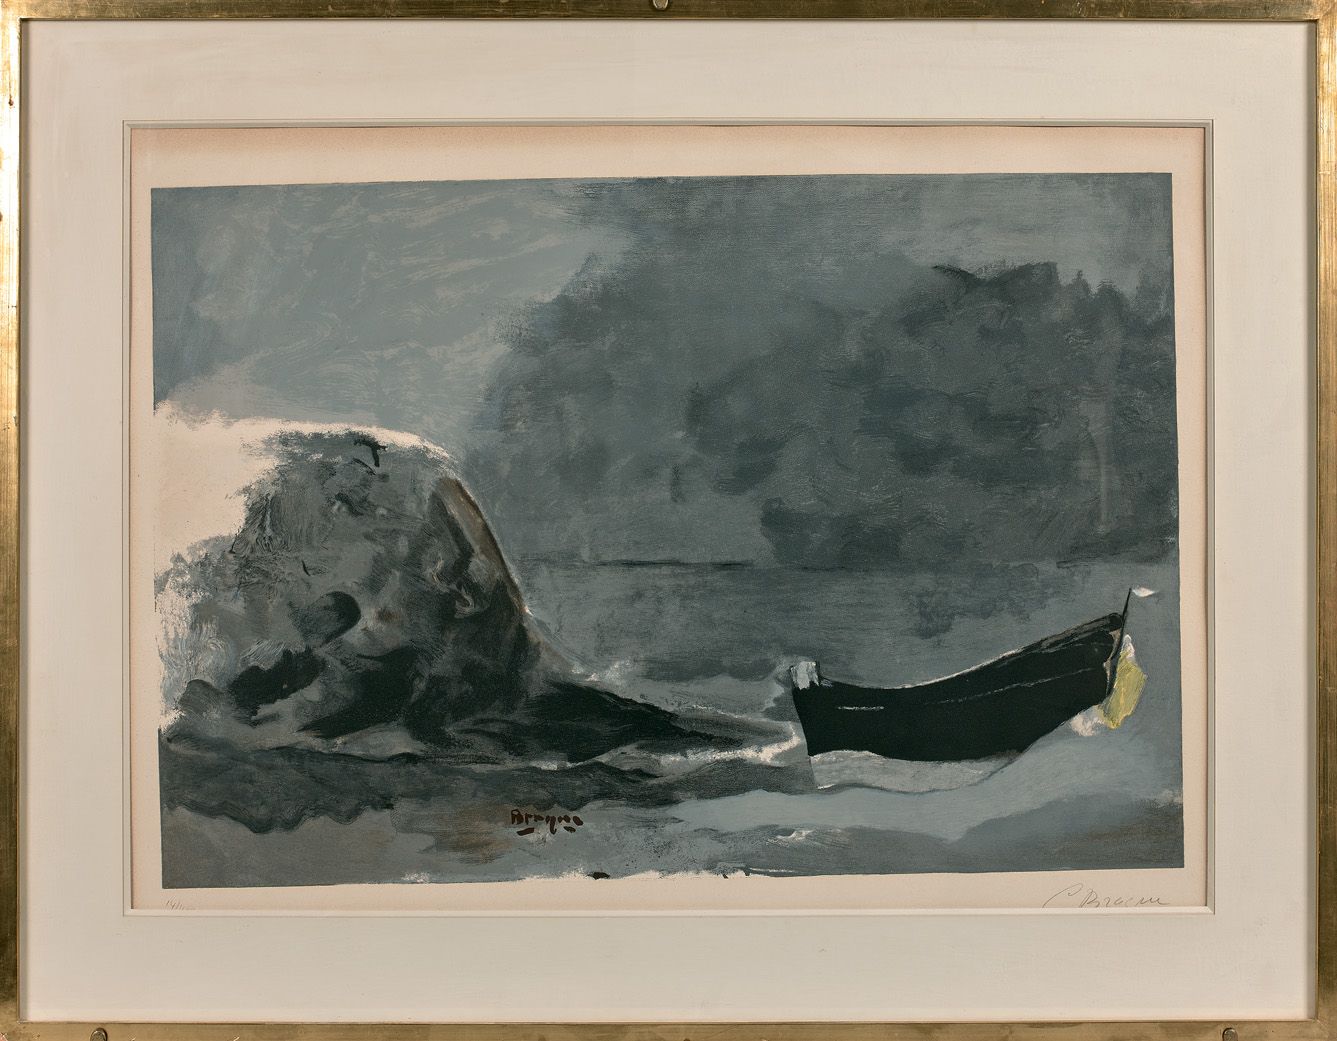 BRAQUE 乔治-布拉克 (1882-1963)

黑海

彩色石板画，编号14/400，右下角有签名。约1950年。

高度49 - 宽度73厘米



参&hellip;